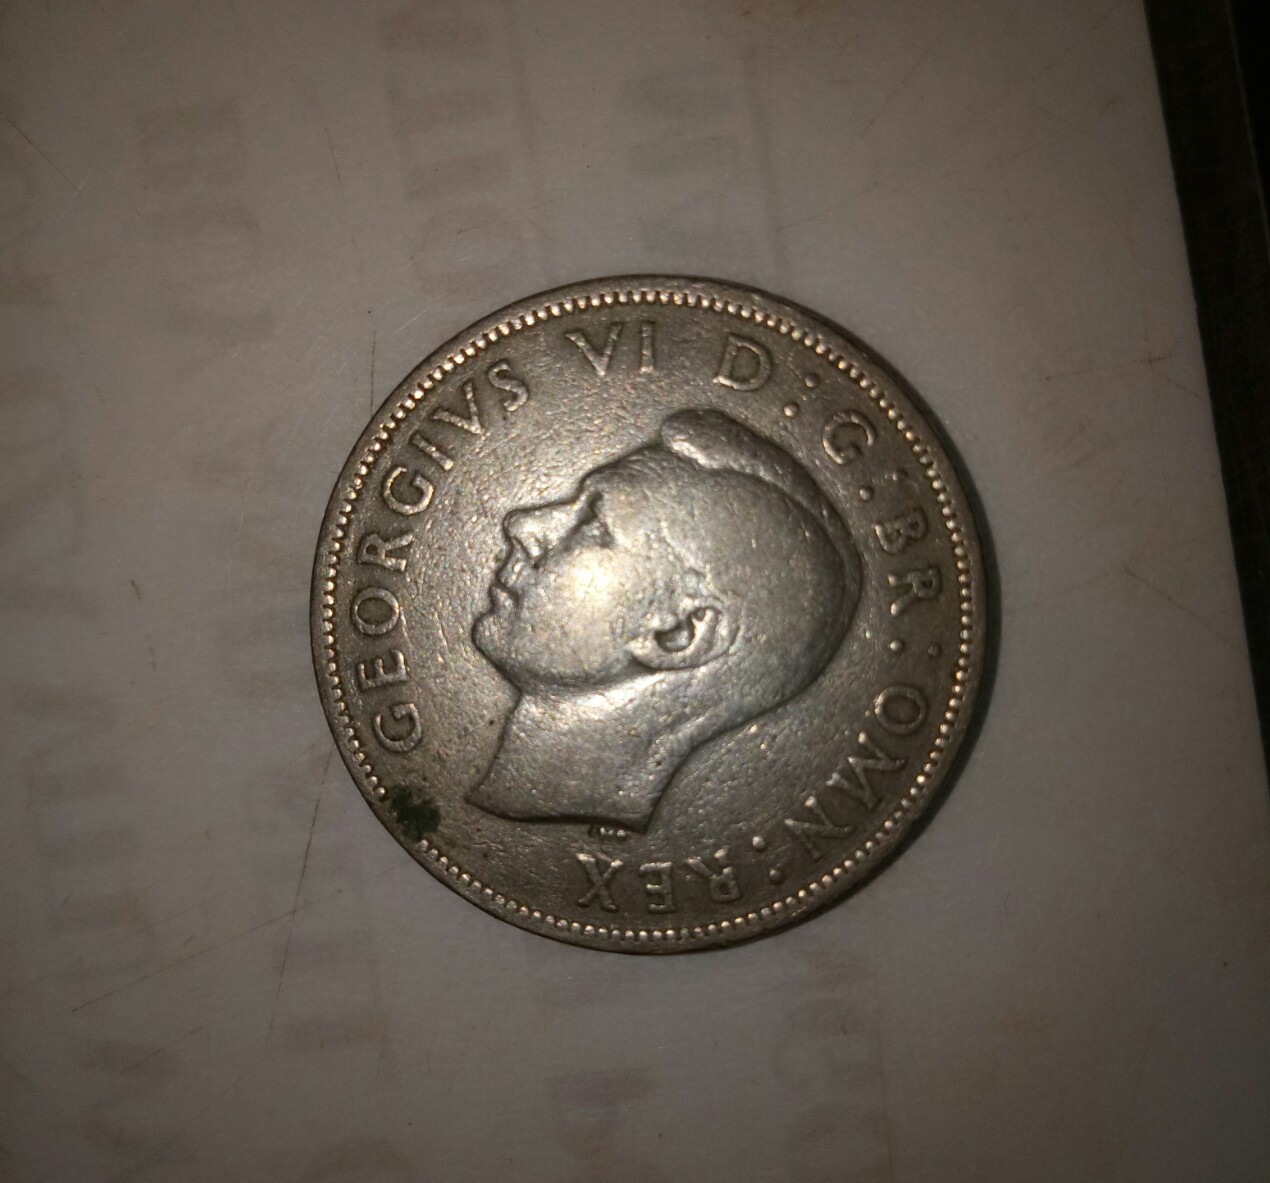 two shilling 1948 georgivs.vi.d:g:br